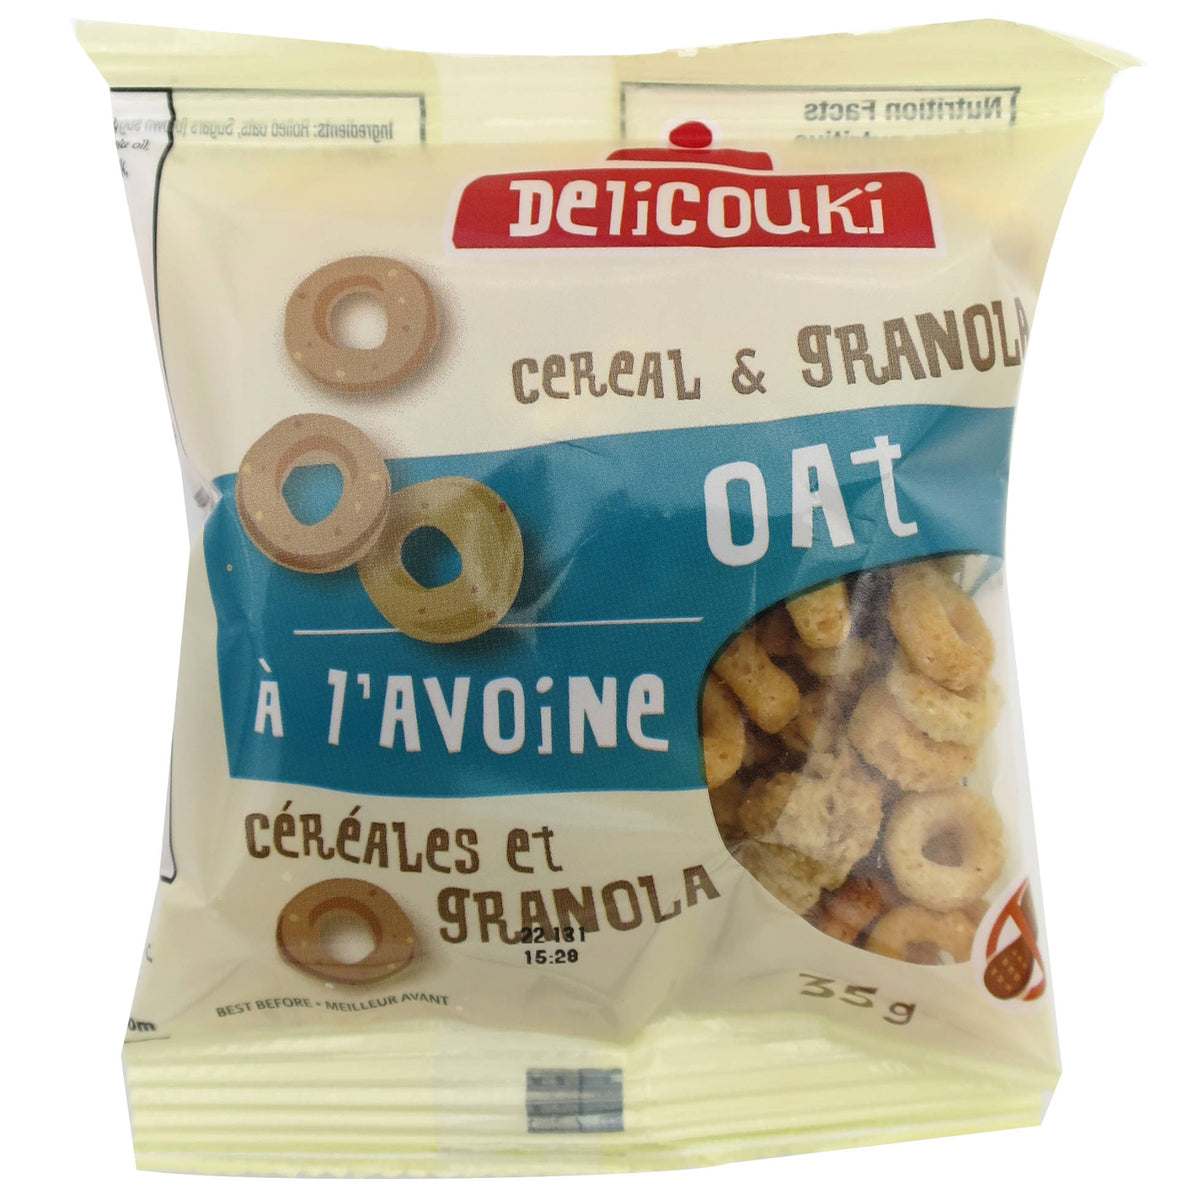 Oatmeal Cereals &amp; Granola Box - 24 bags